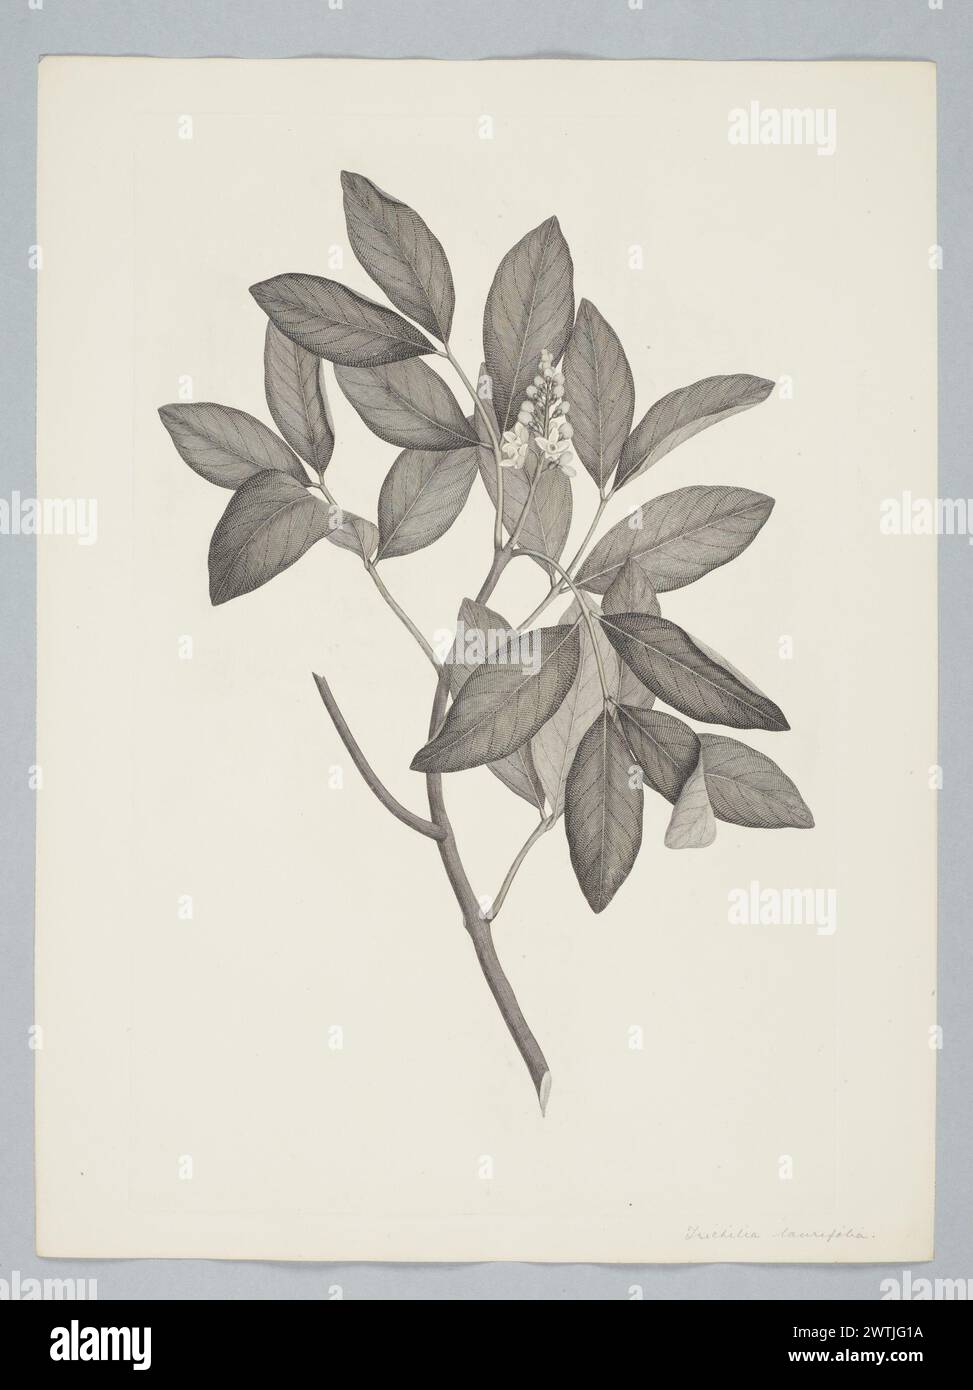 Xylocarpus granatum Koenig prints, copper engravings, line engravings Stock Photo